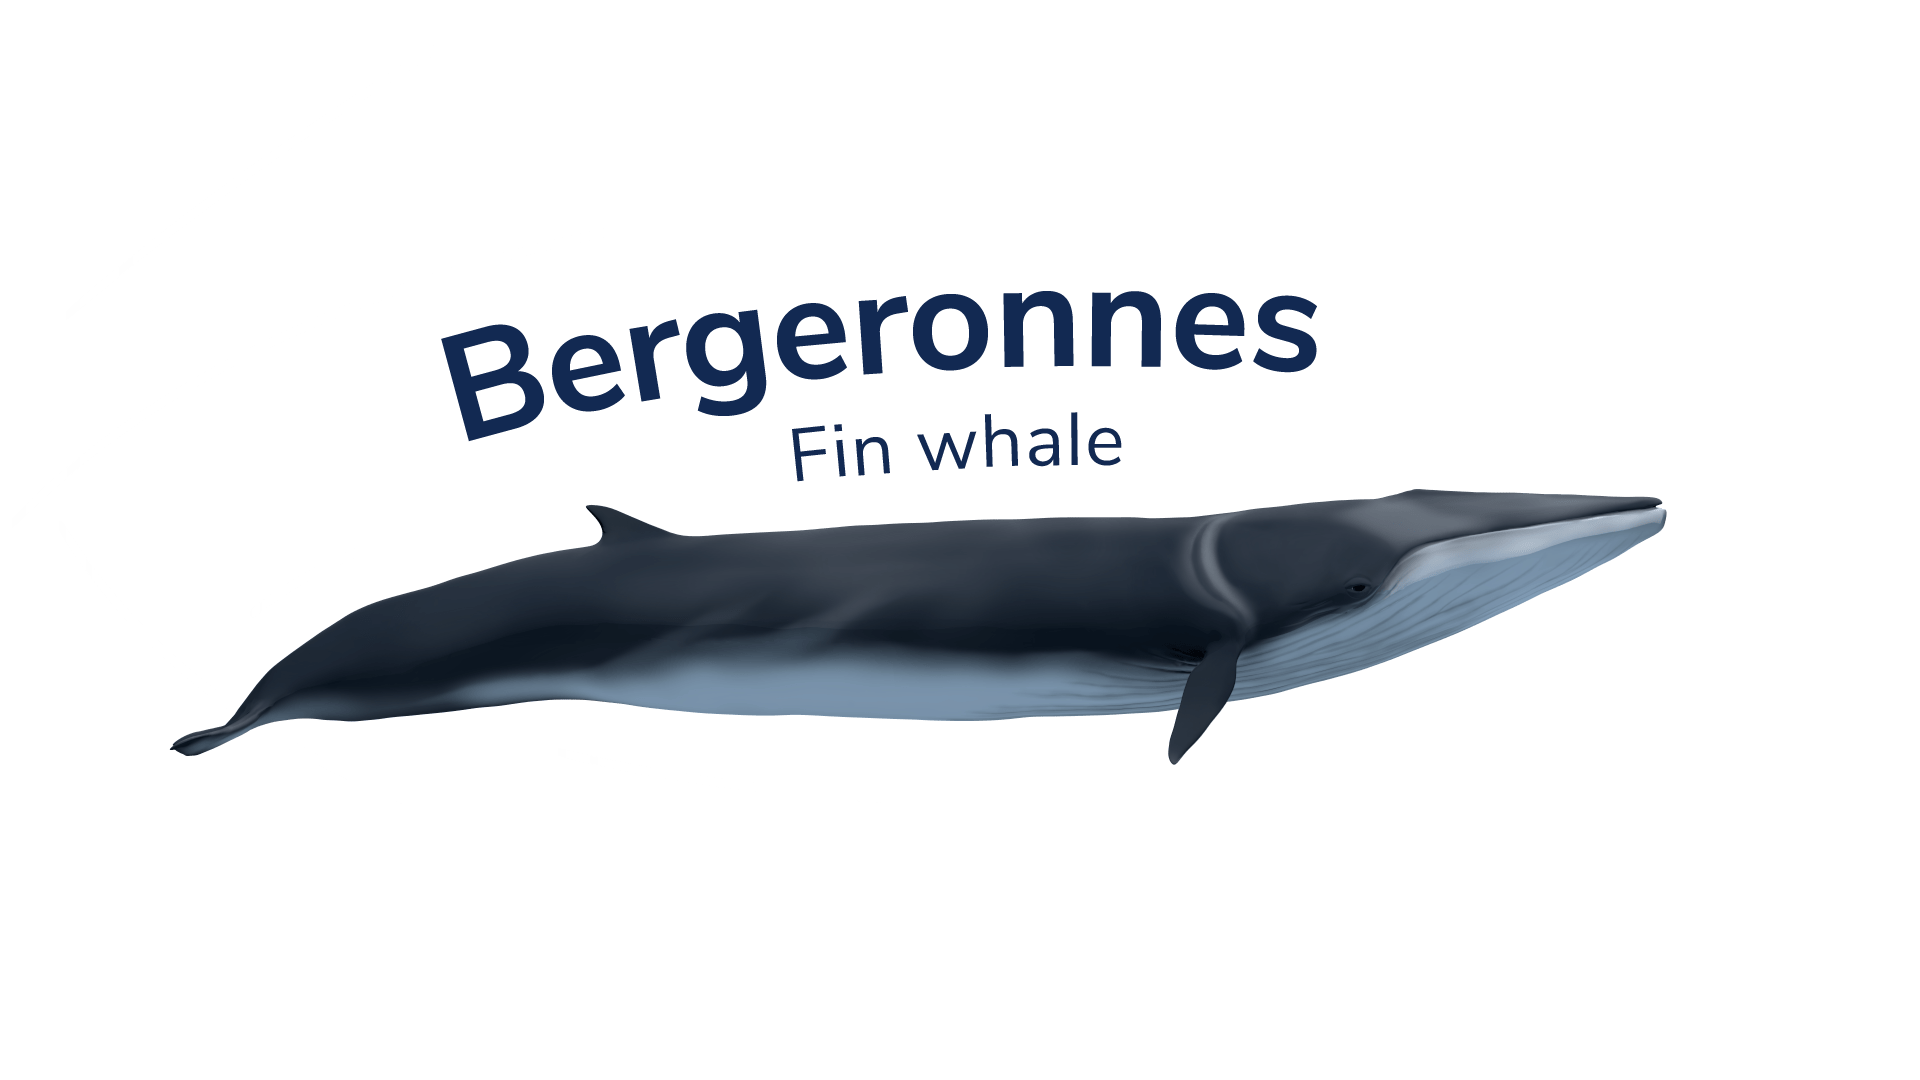 The fin whale Bergeronnes